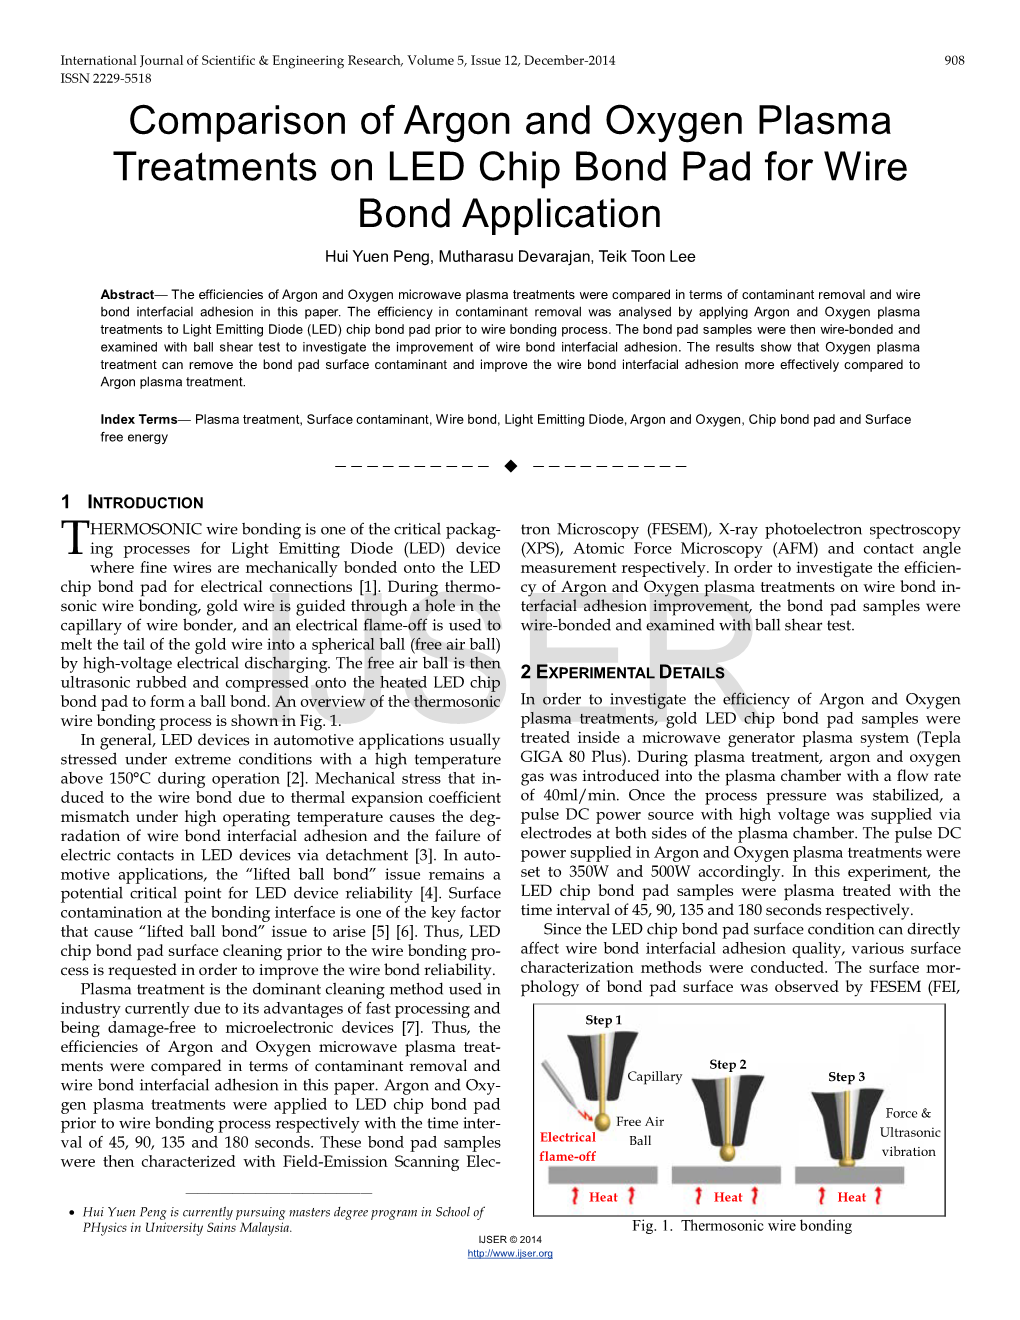 Comparison of Argon and Oxygen Plasma Treatments on LED Chip Bond Pad for Wire Bond Application Hui Yuen Peng, Mutharasu Devarajan, Teik Toon Lee